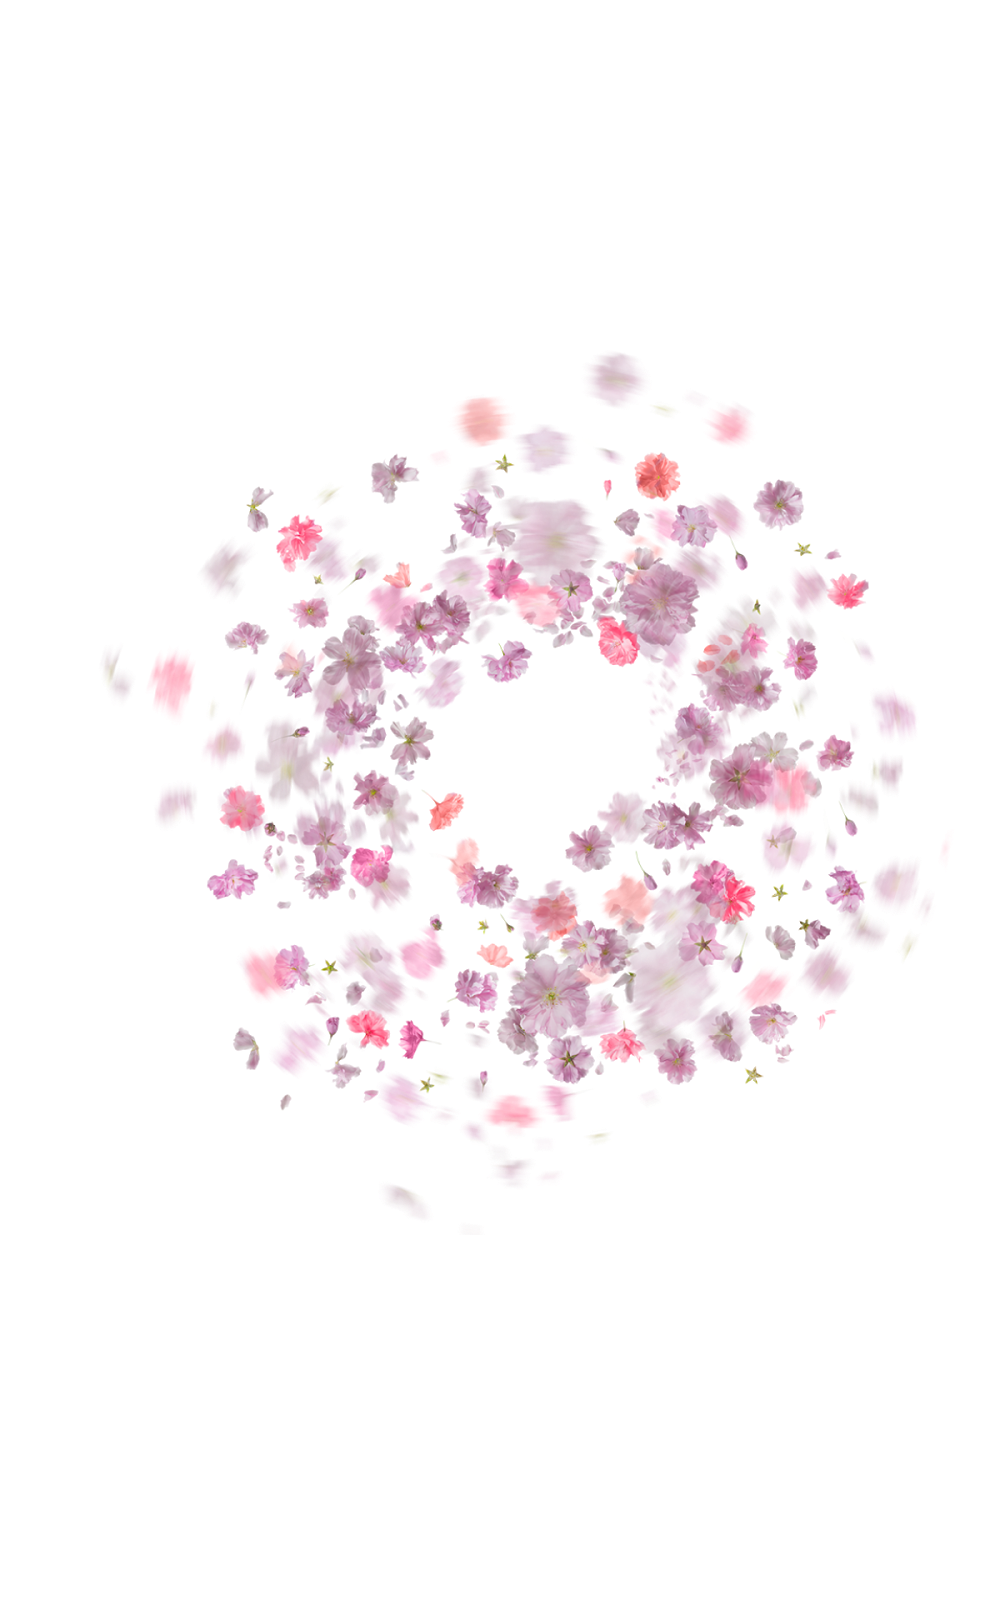 Download PNG image - Falling Rose Petals PNG Transparent Picture 